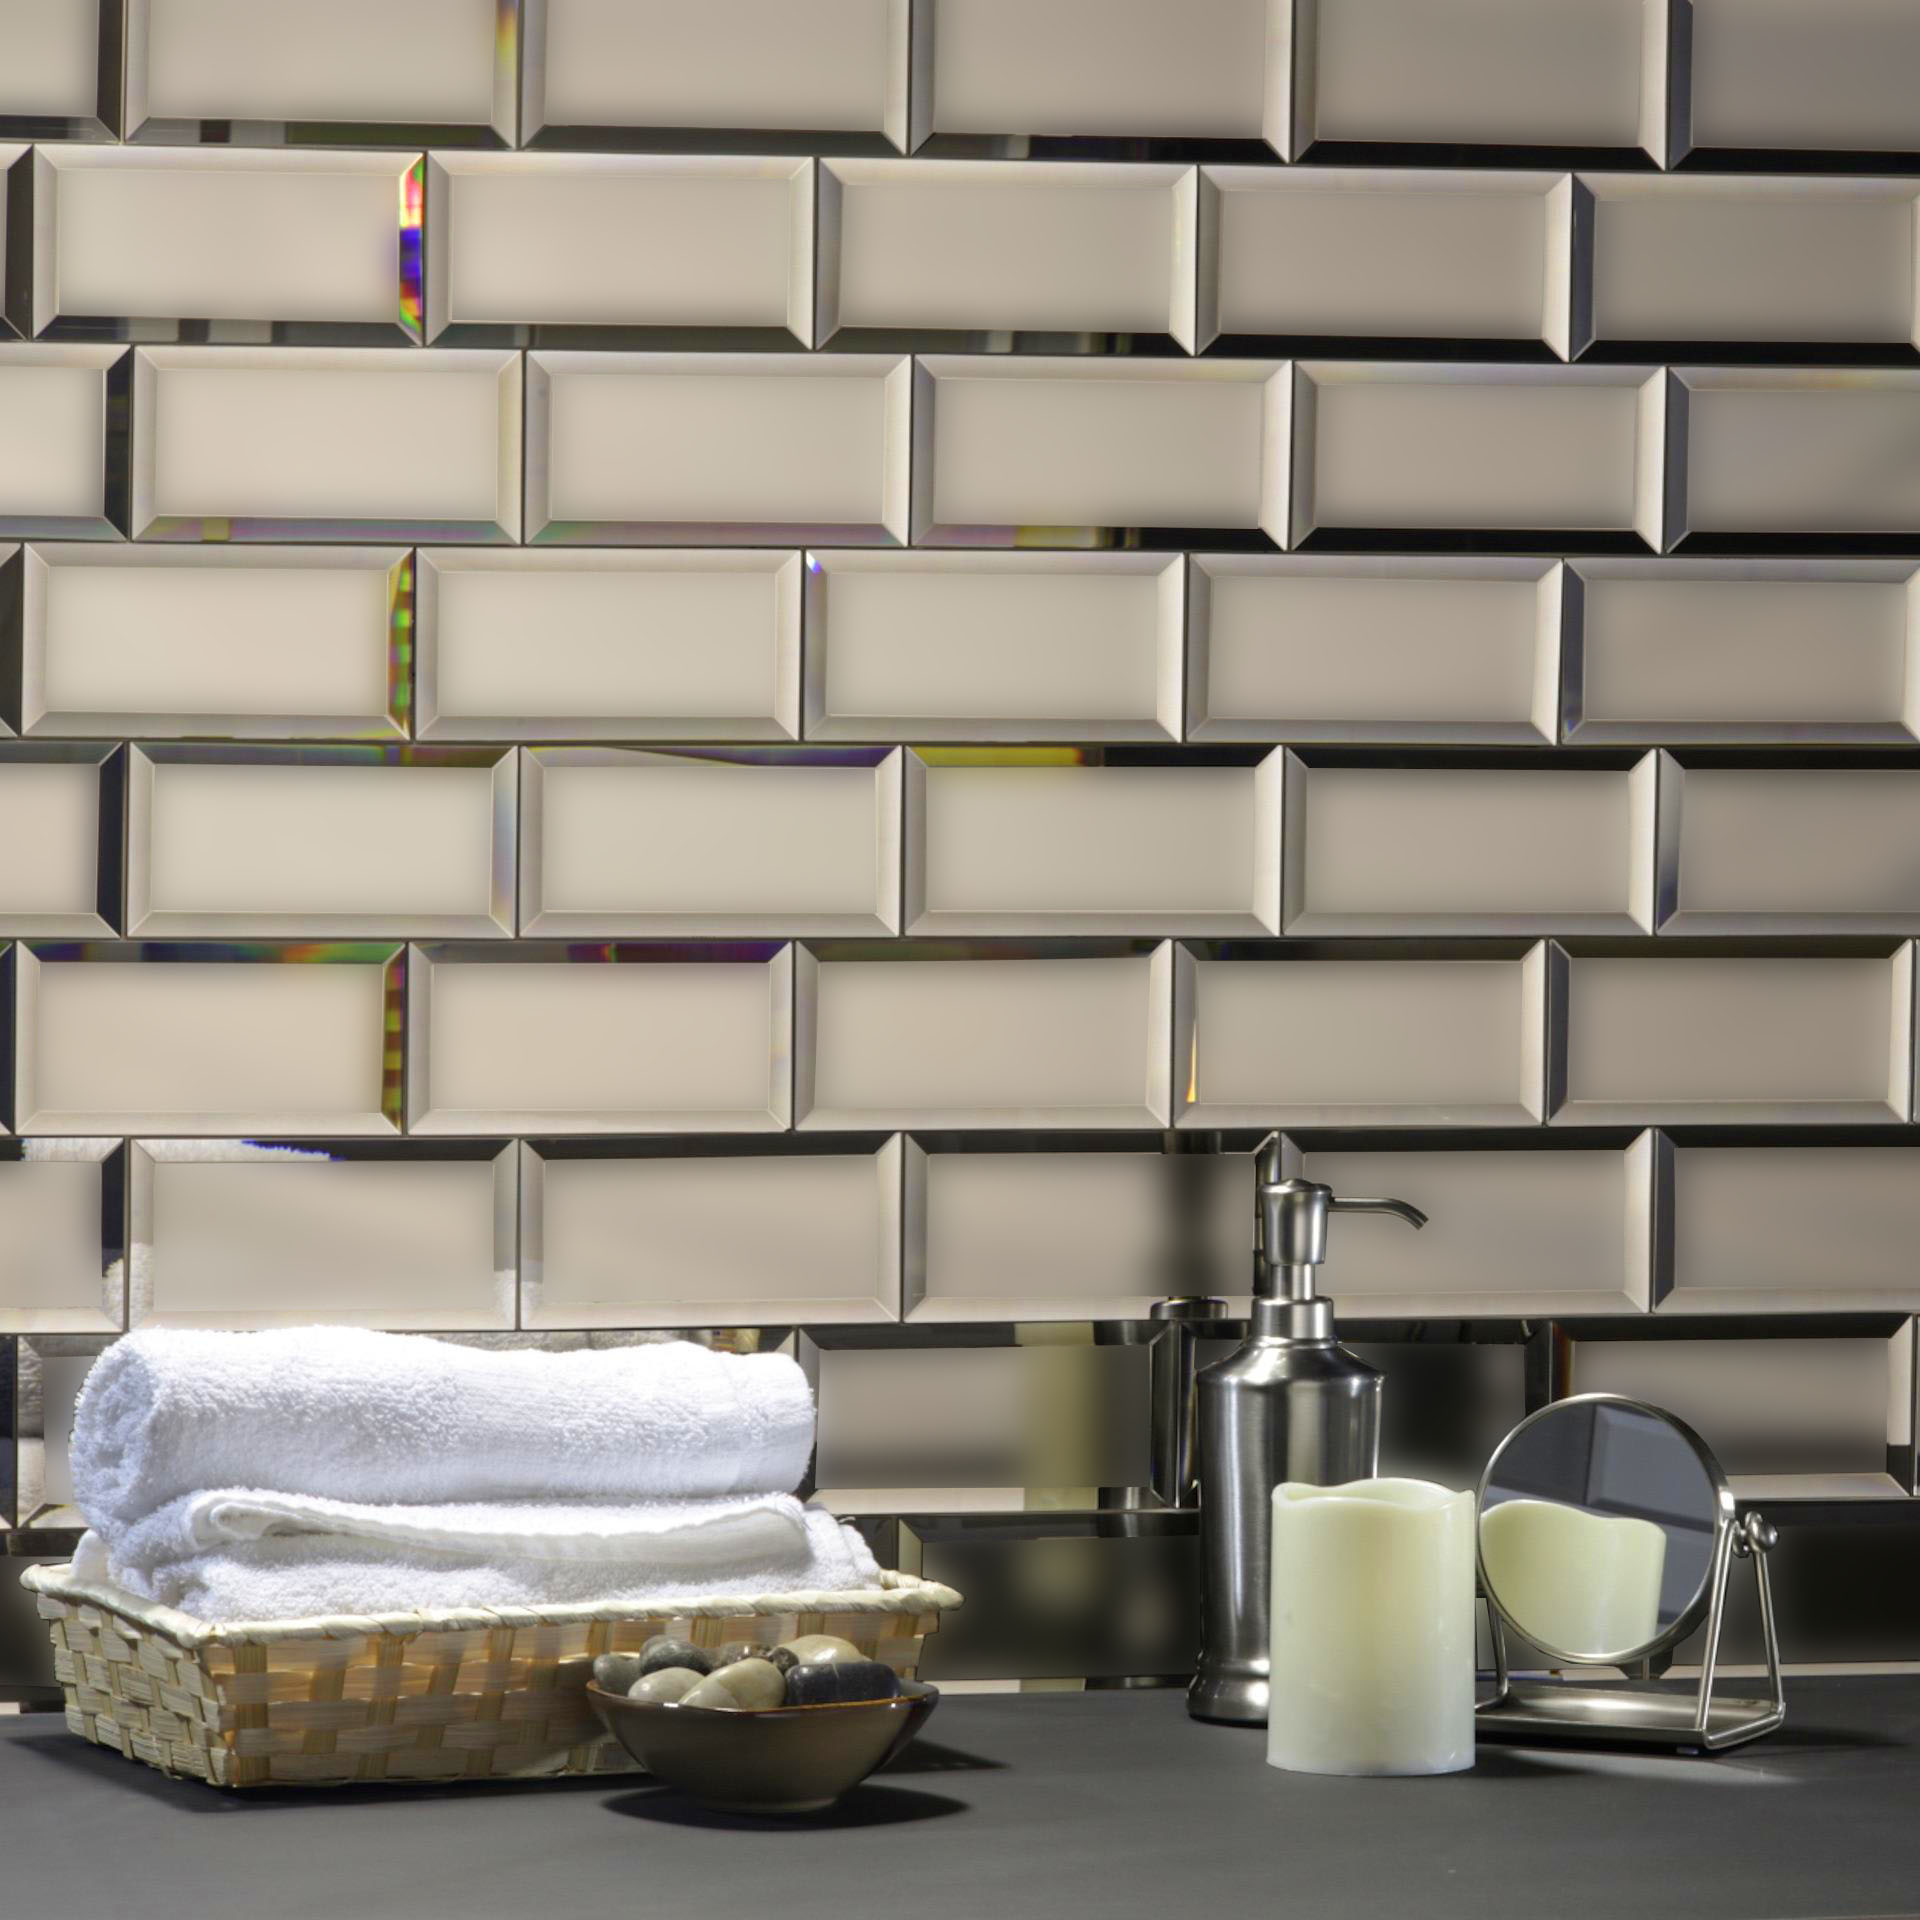 16X Mirror Tile Wall Sticker Square Self Adhesive Room Bathroom Decor Stick US